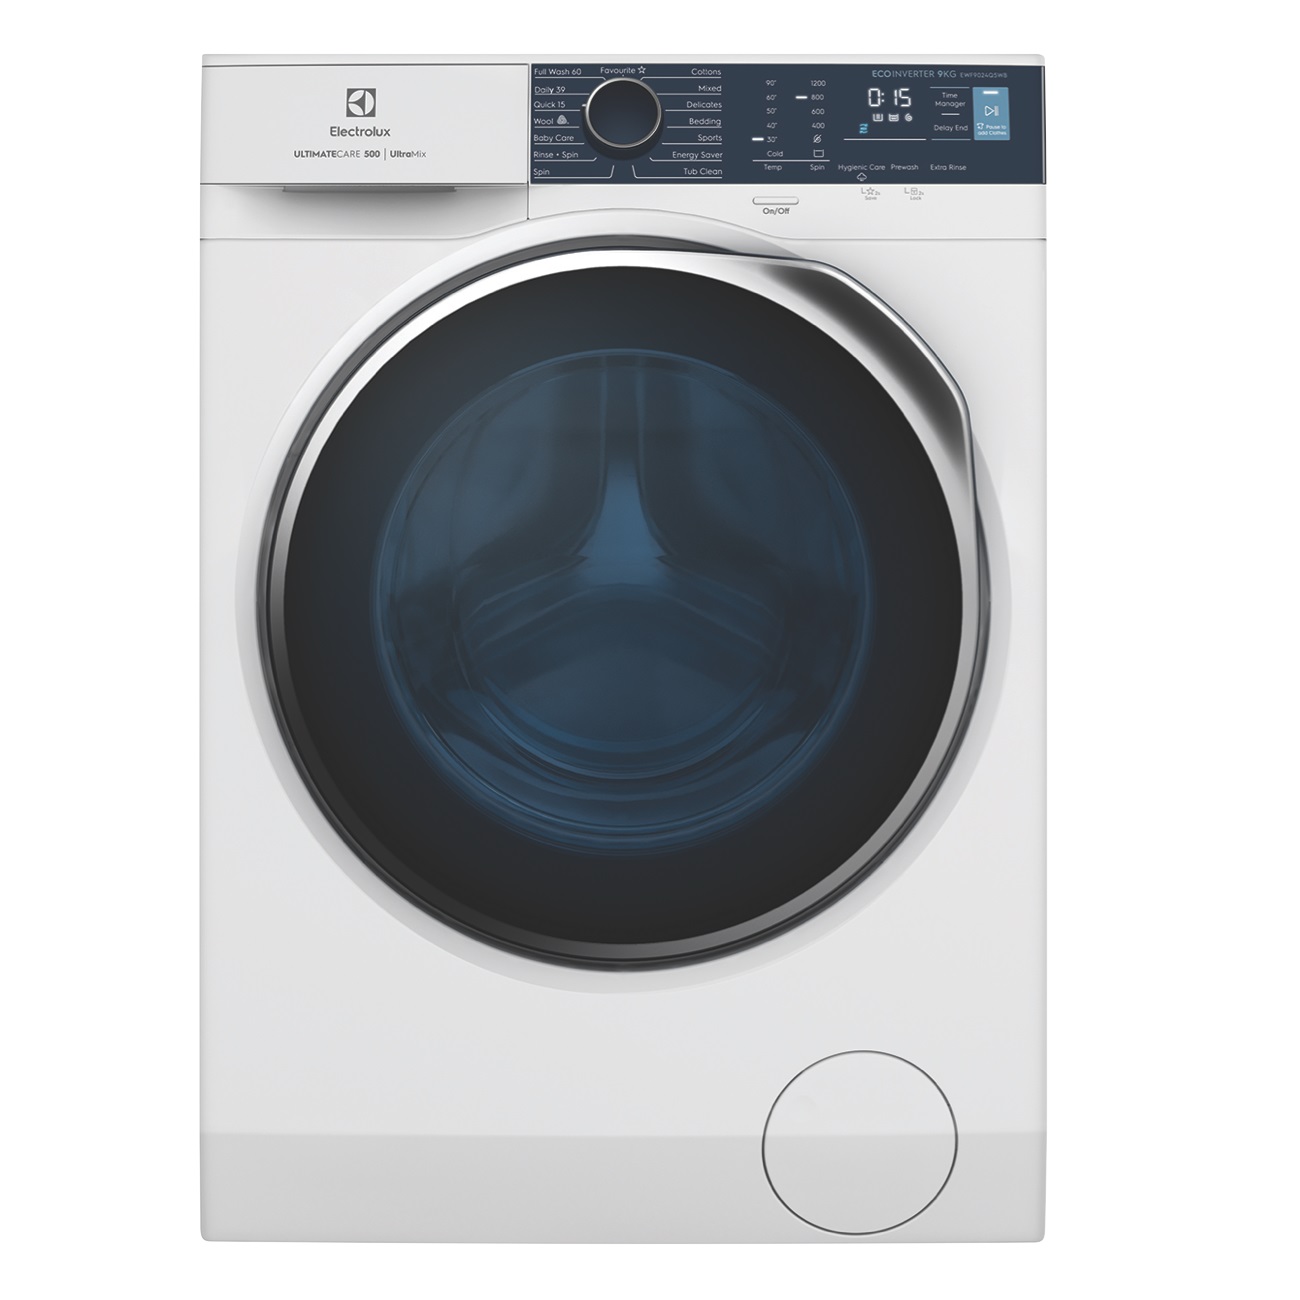 Electrolux washing machine rent to own